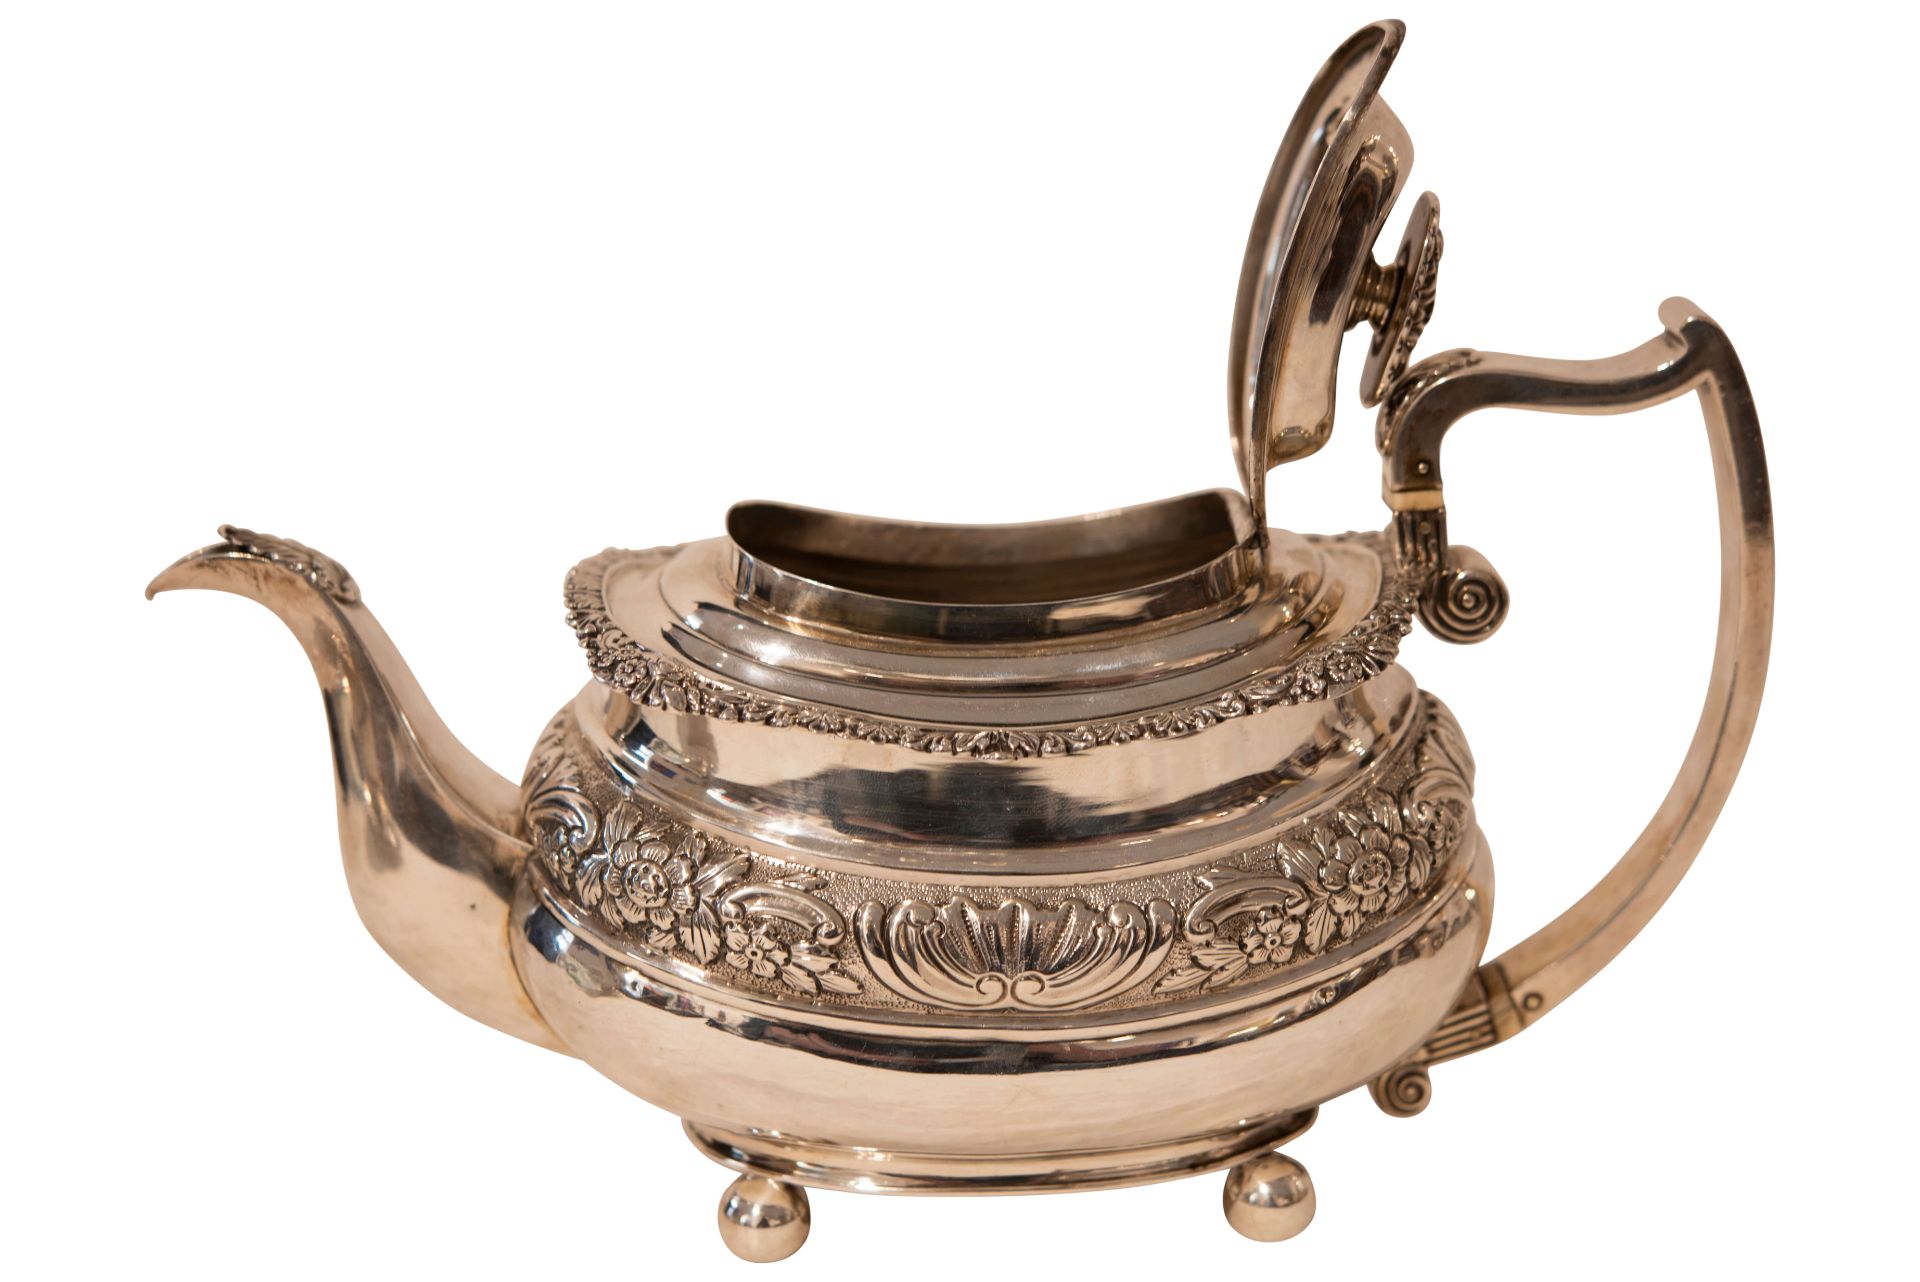 Massive antike Teekanne |Massive Antique Teapot - Image 2 of 5